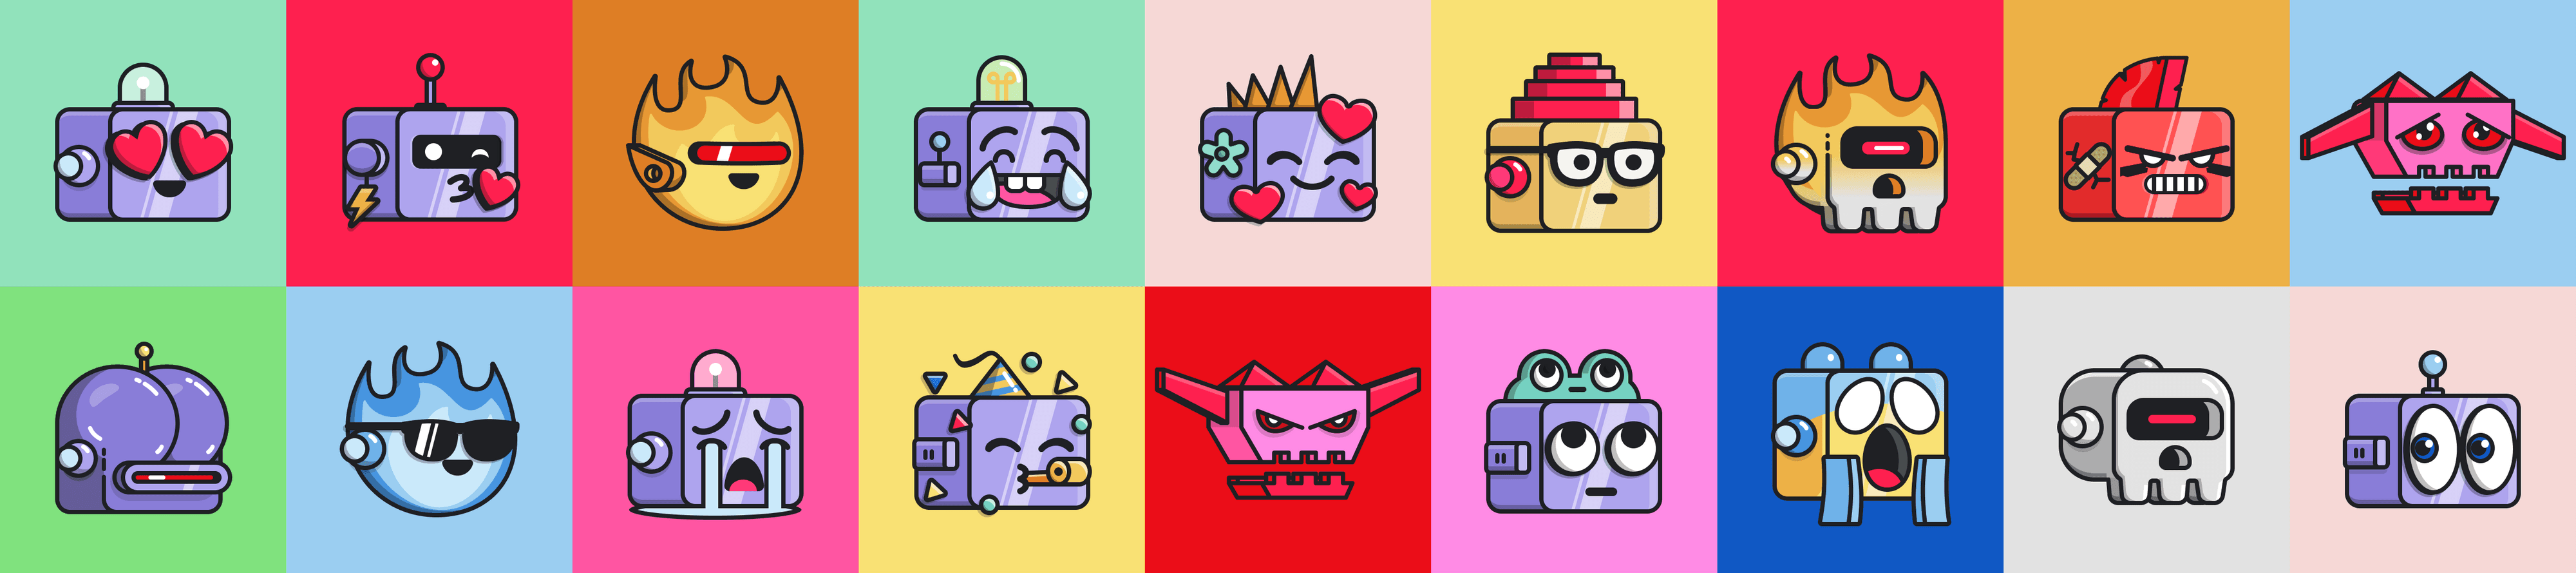 Emojibotos